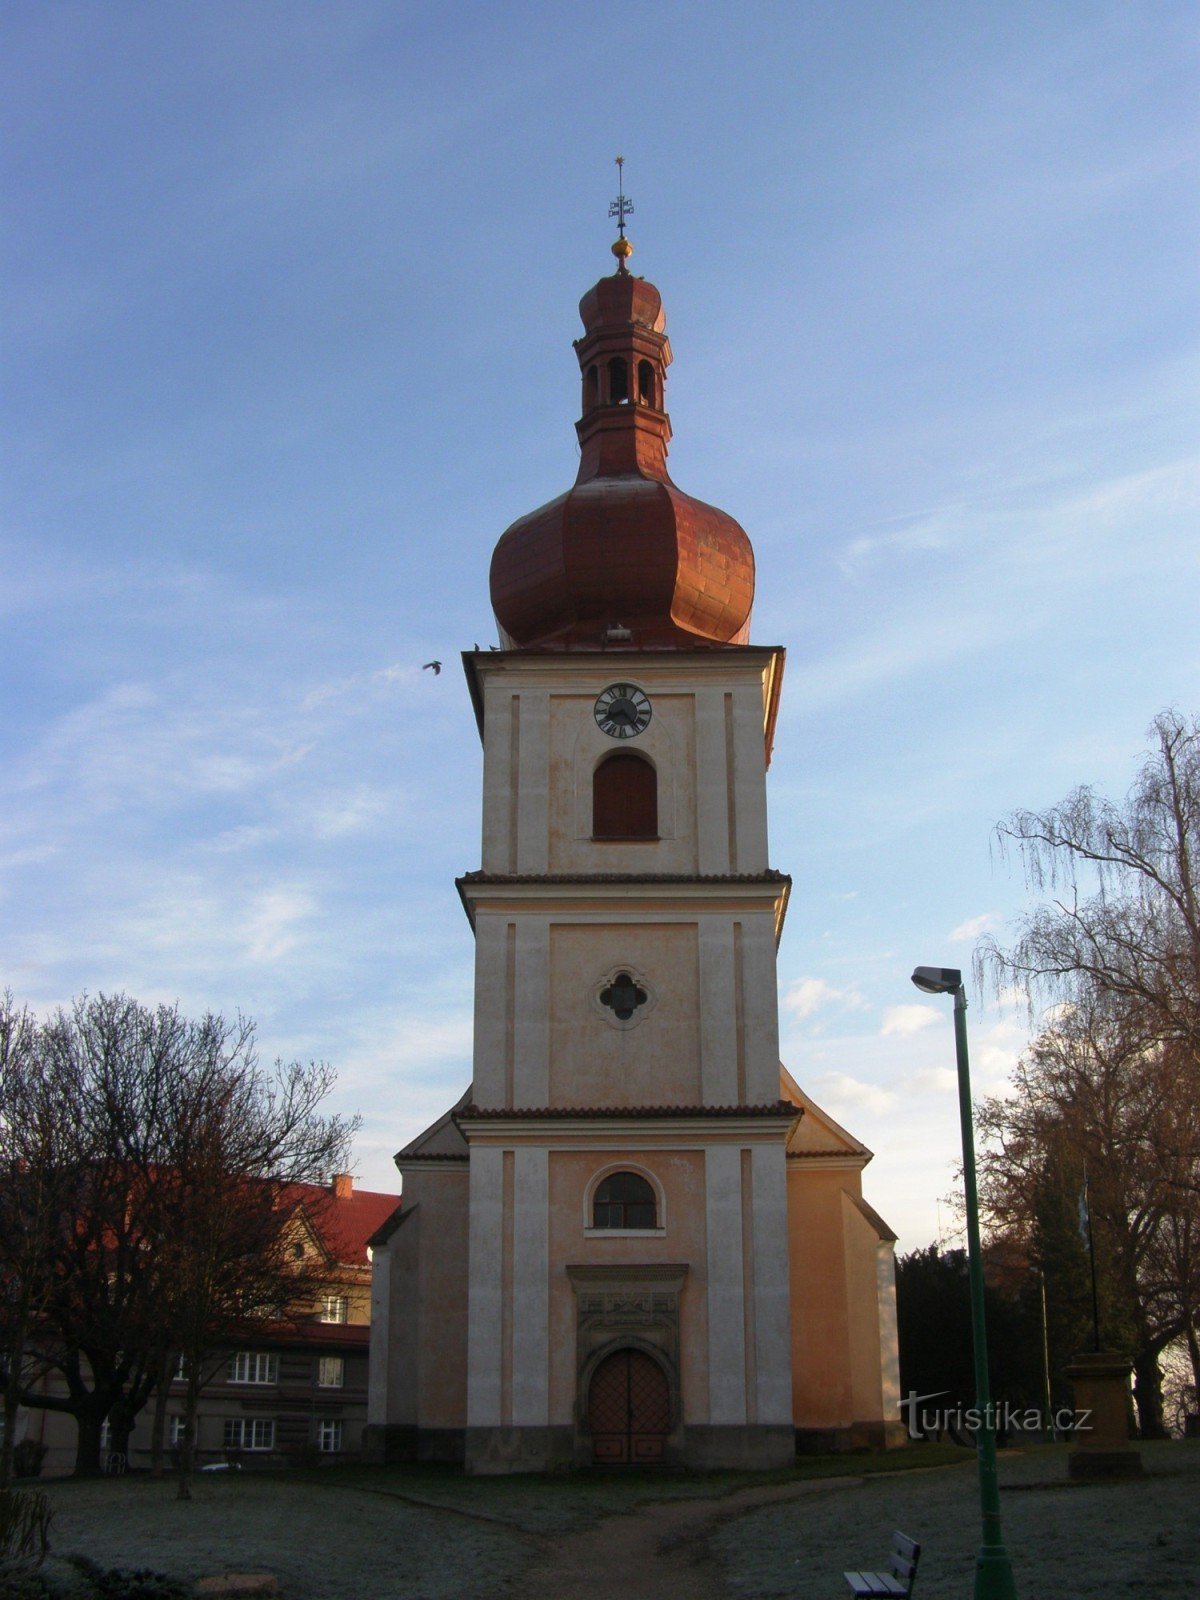 Jaroměř - biserica Sf. Jakub